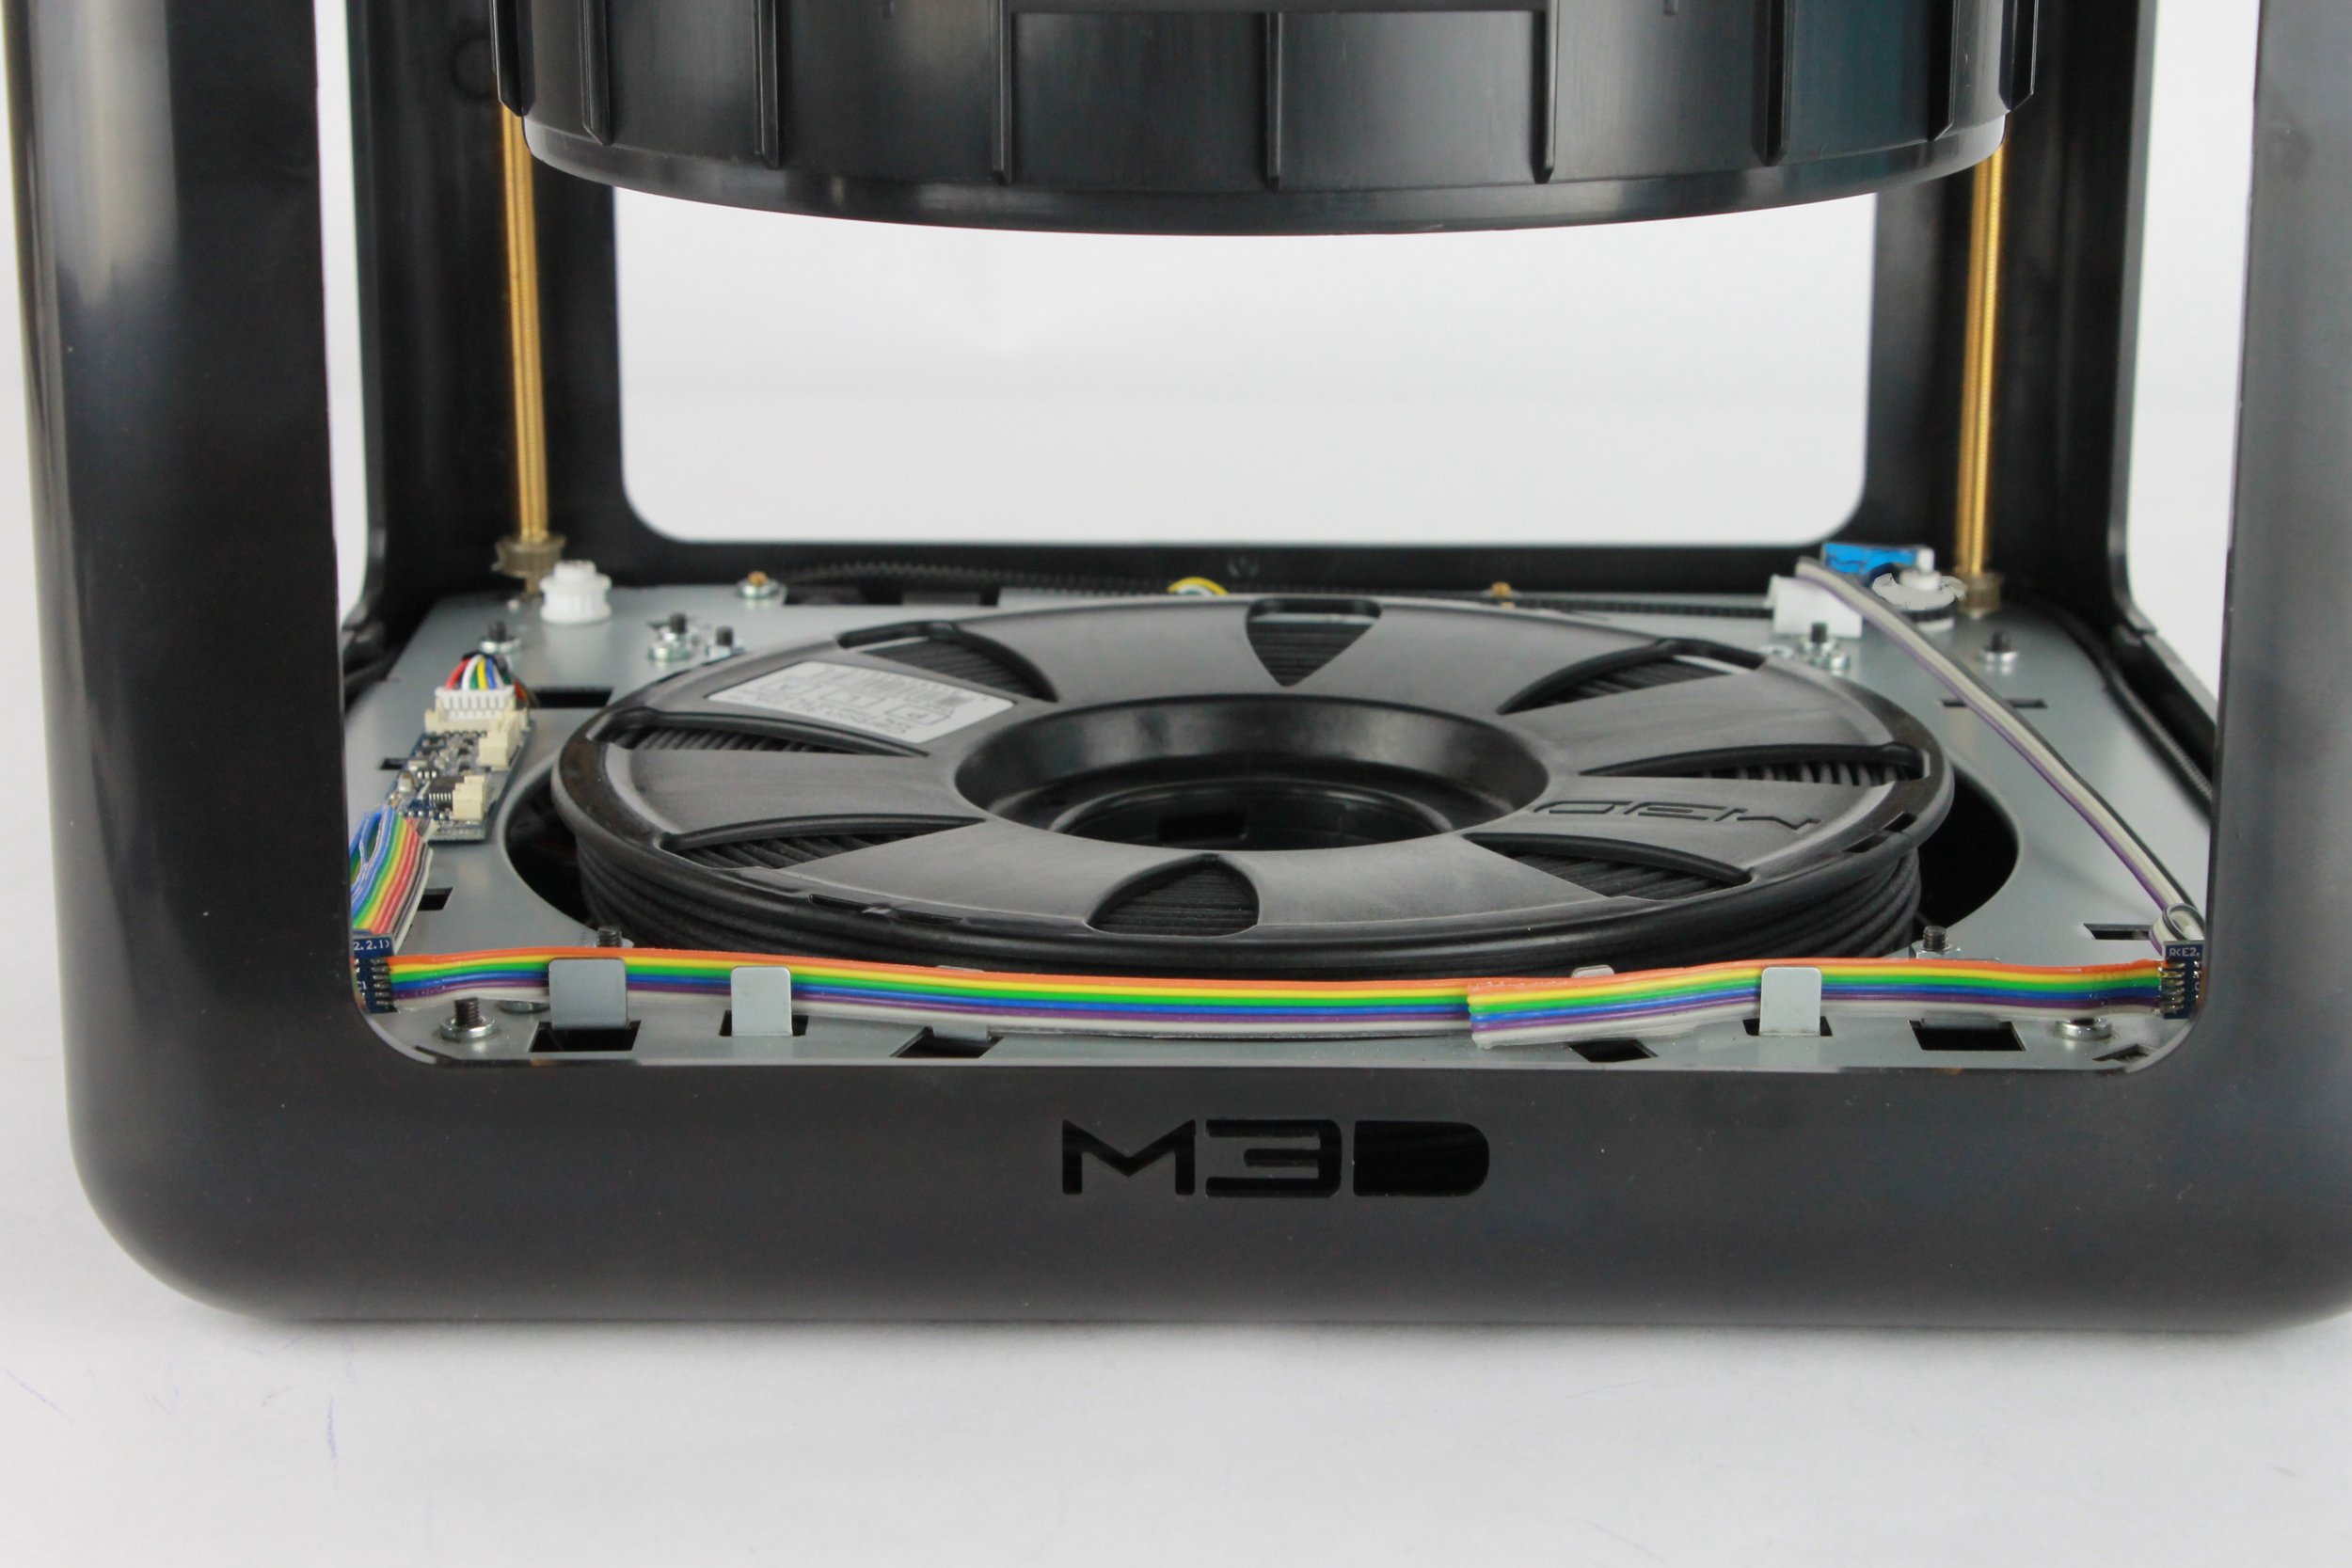  The M3D Pro's hidden internal spool storage compartment 